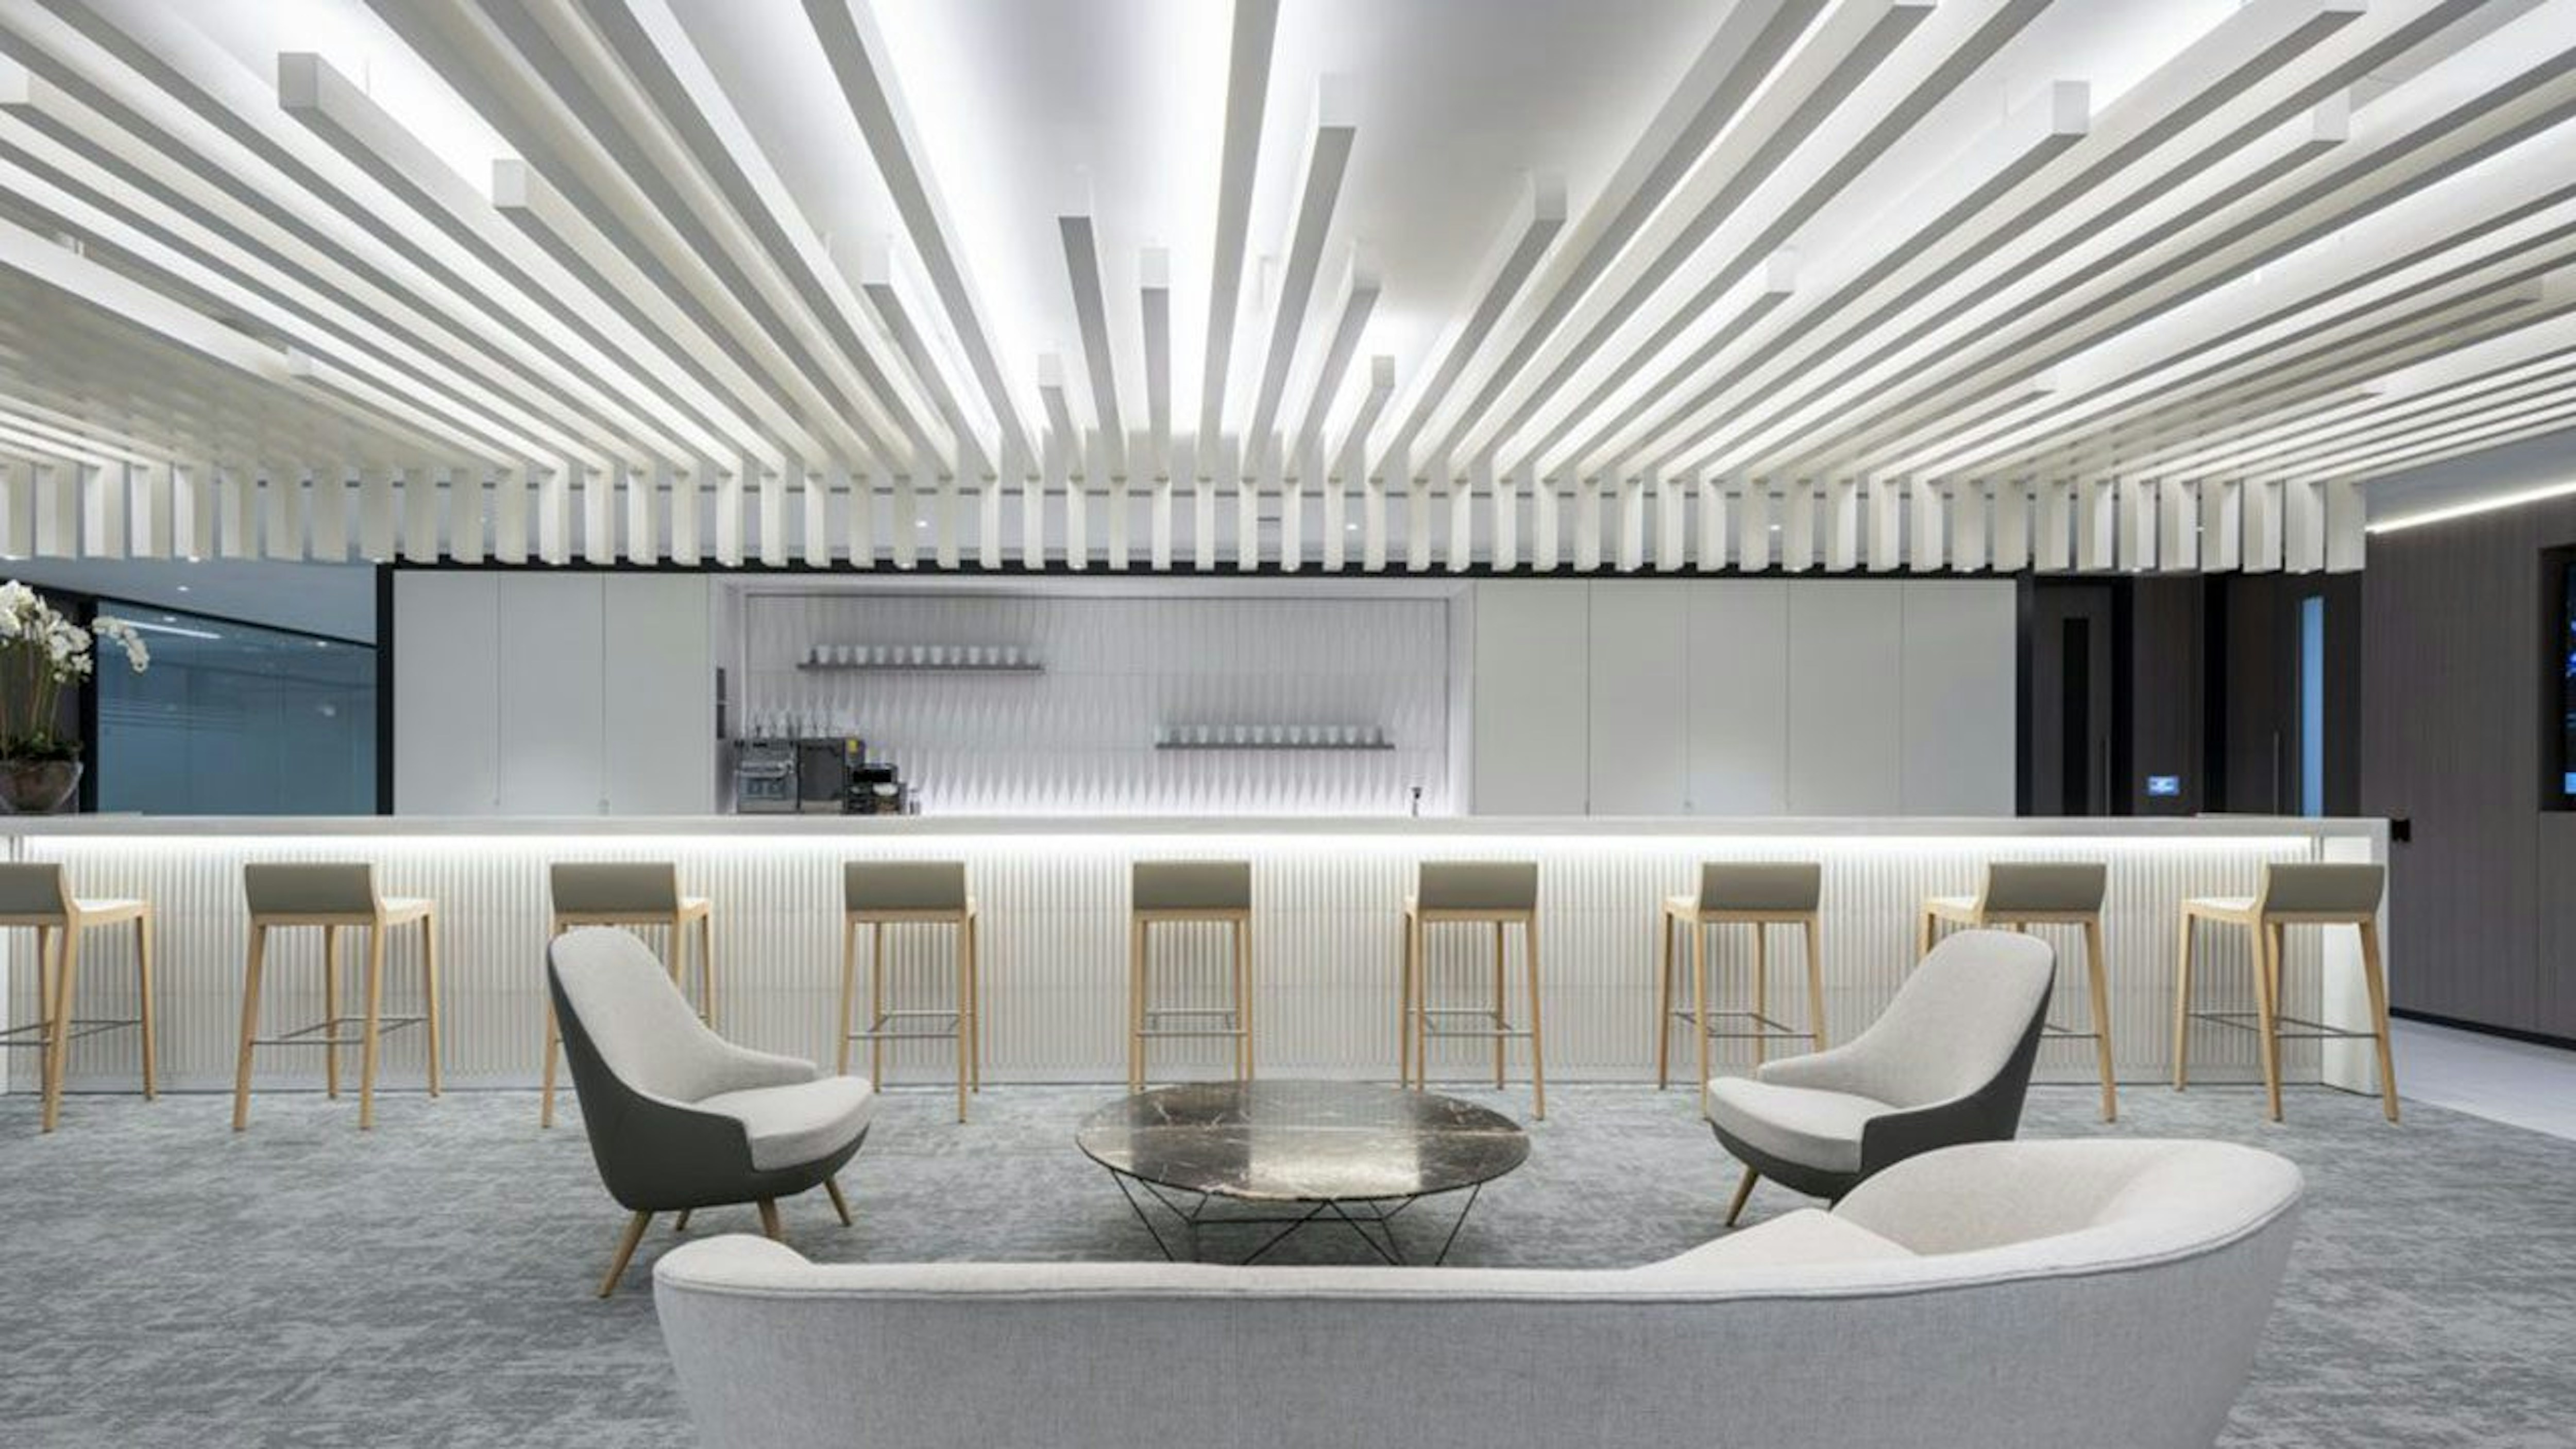 An Elegant Office Design for PJT Global Investment Bank in London